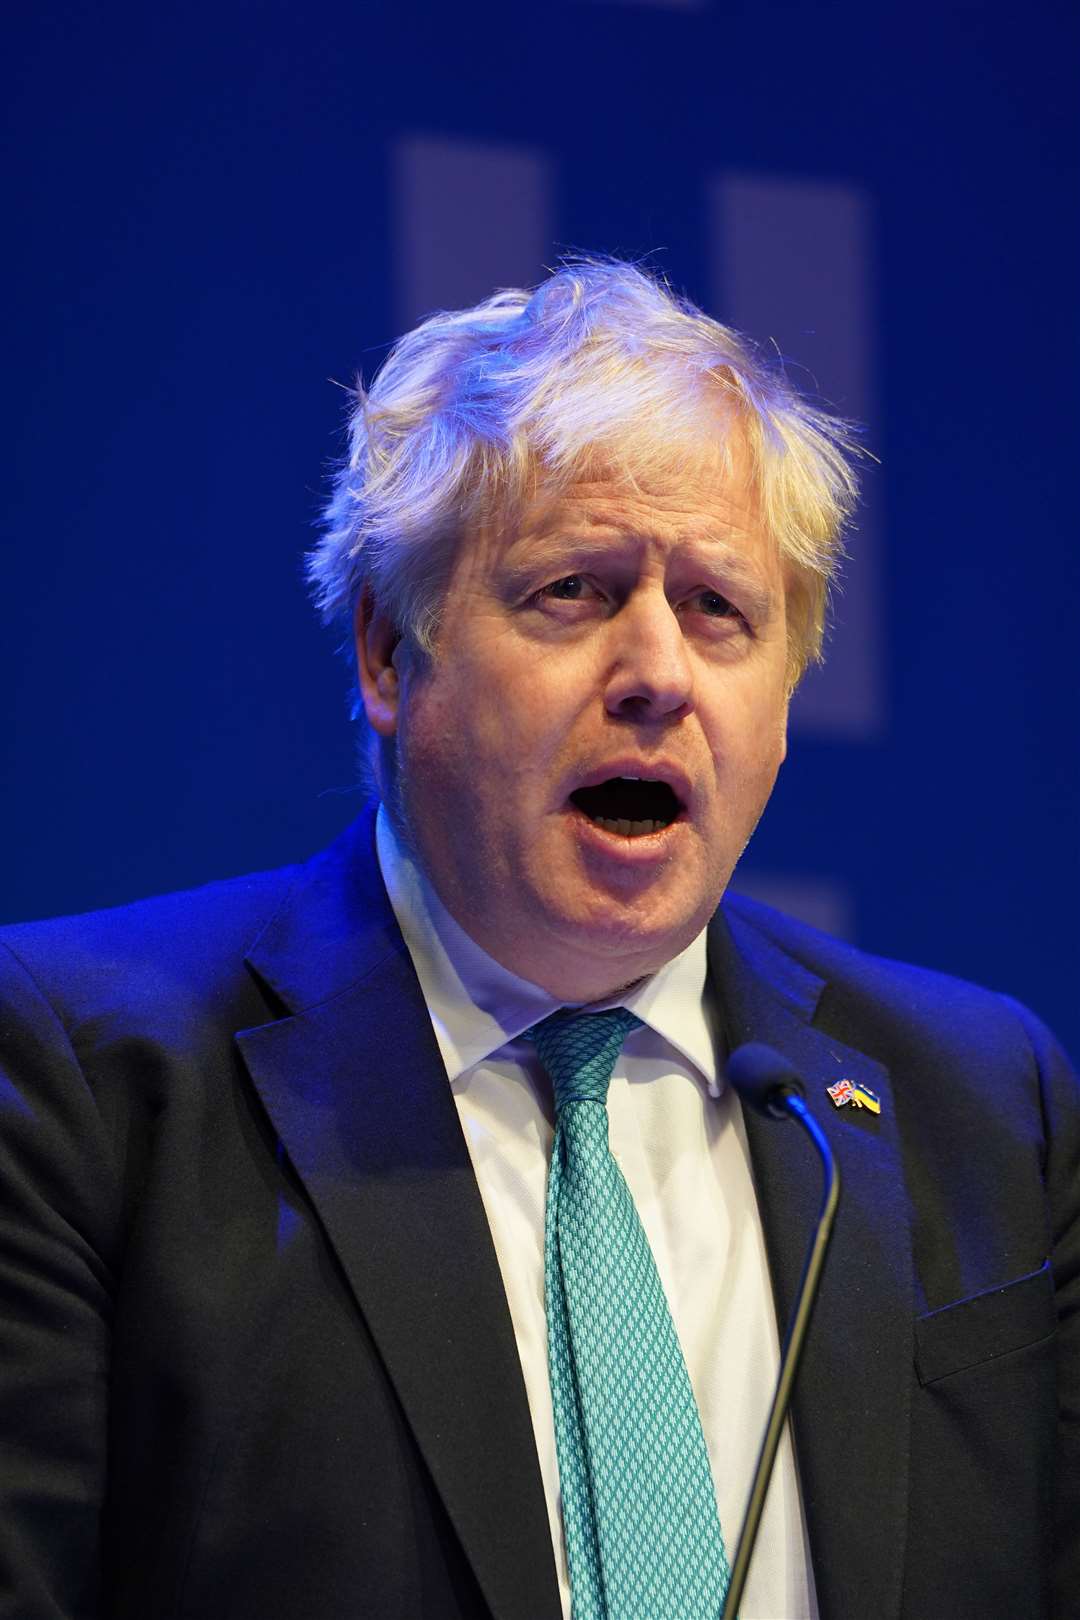 Prime Minister Boris Johnson has been accused of attending lockdown-breaking parties (Andrew Milligan/PA)